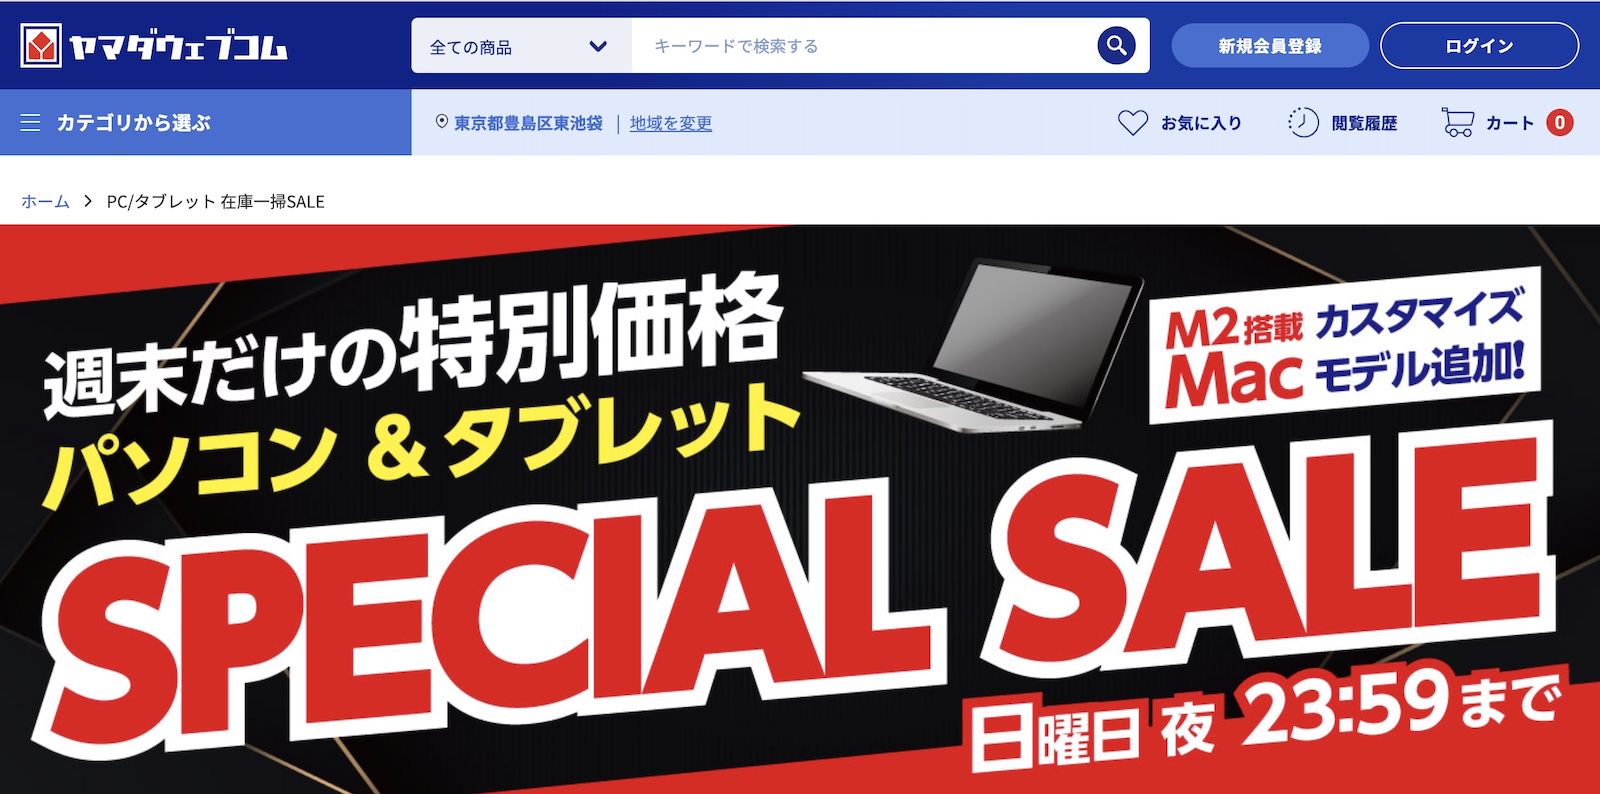 Yamada web com pc sale